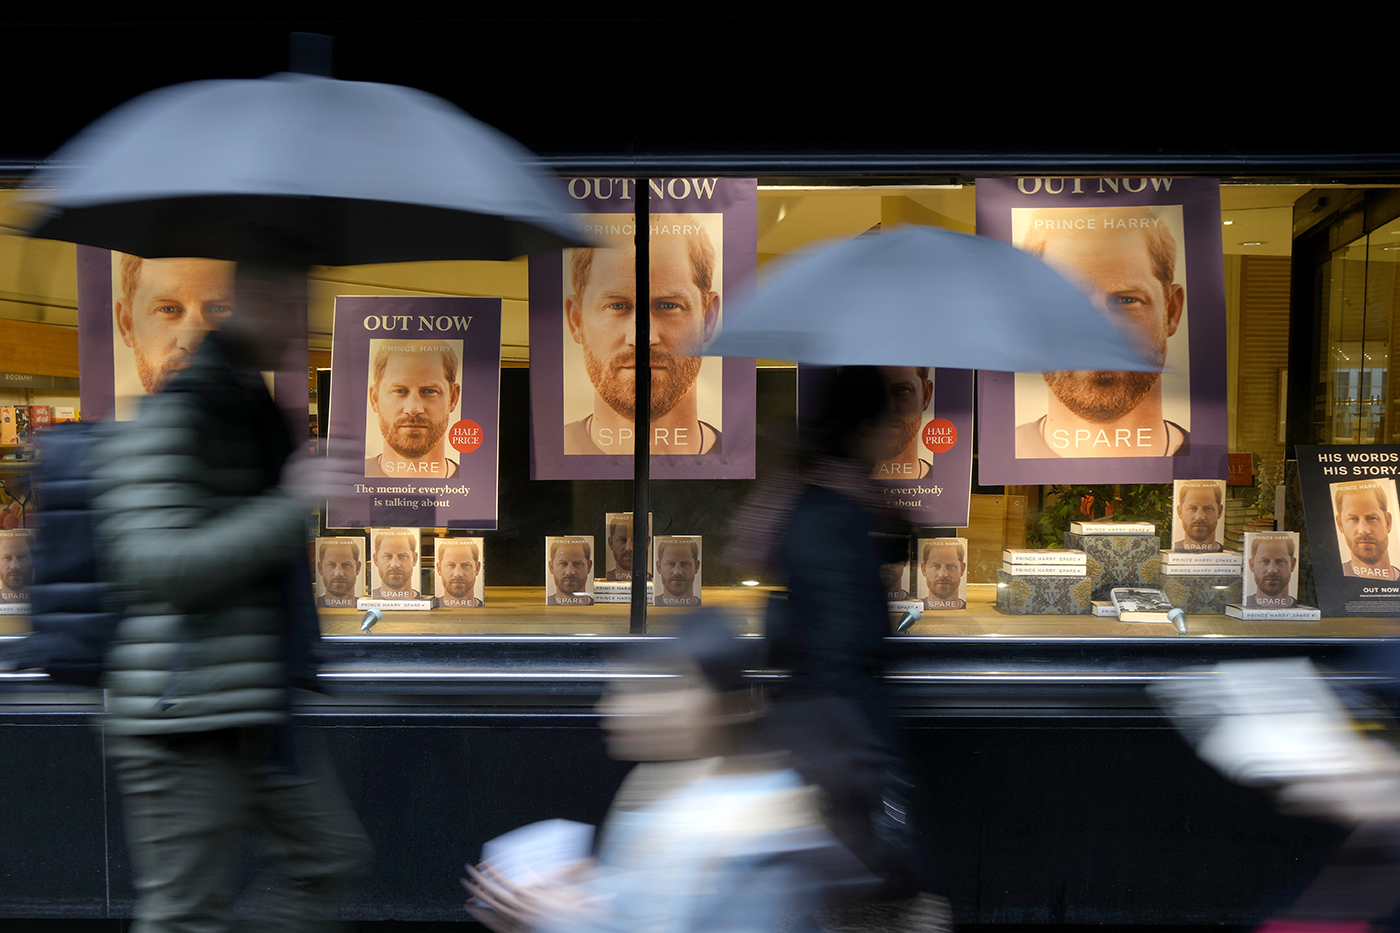 people carrying umbrellas walk past a bookstore window display of prince harry's memoir